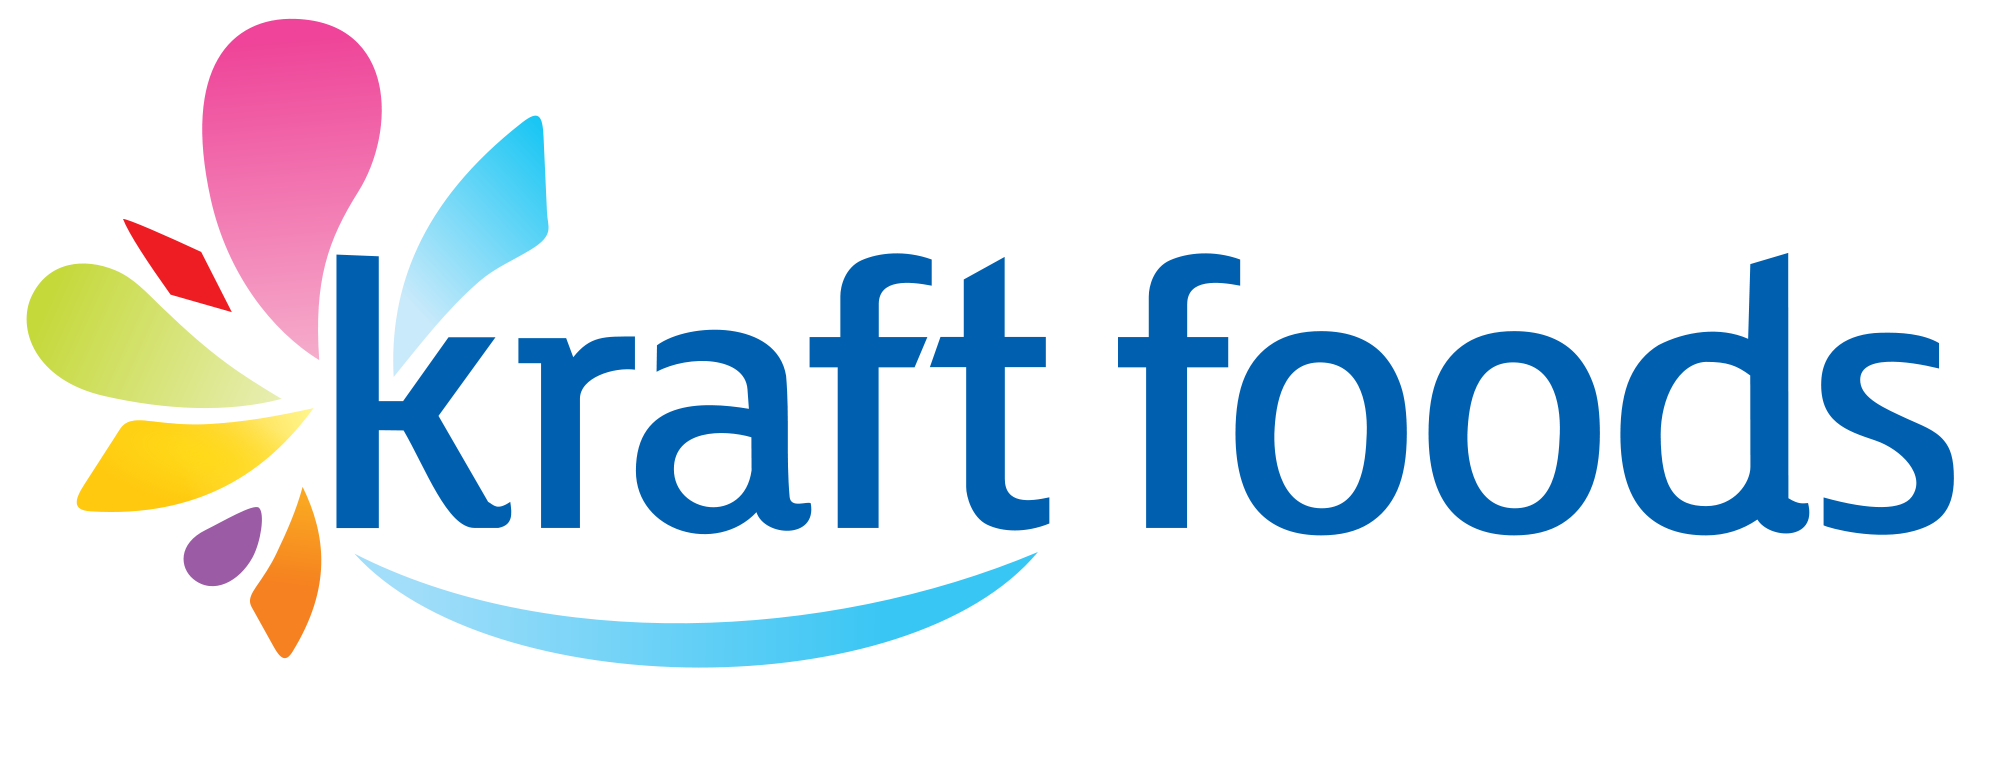 Kraft Foods logo.svg